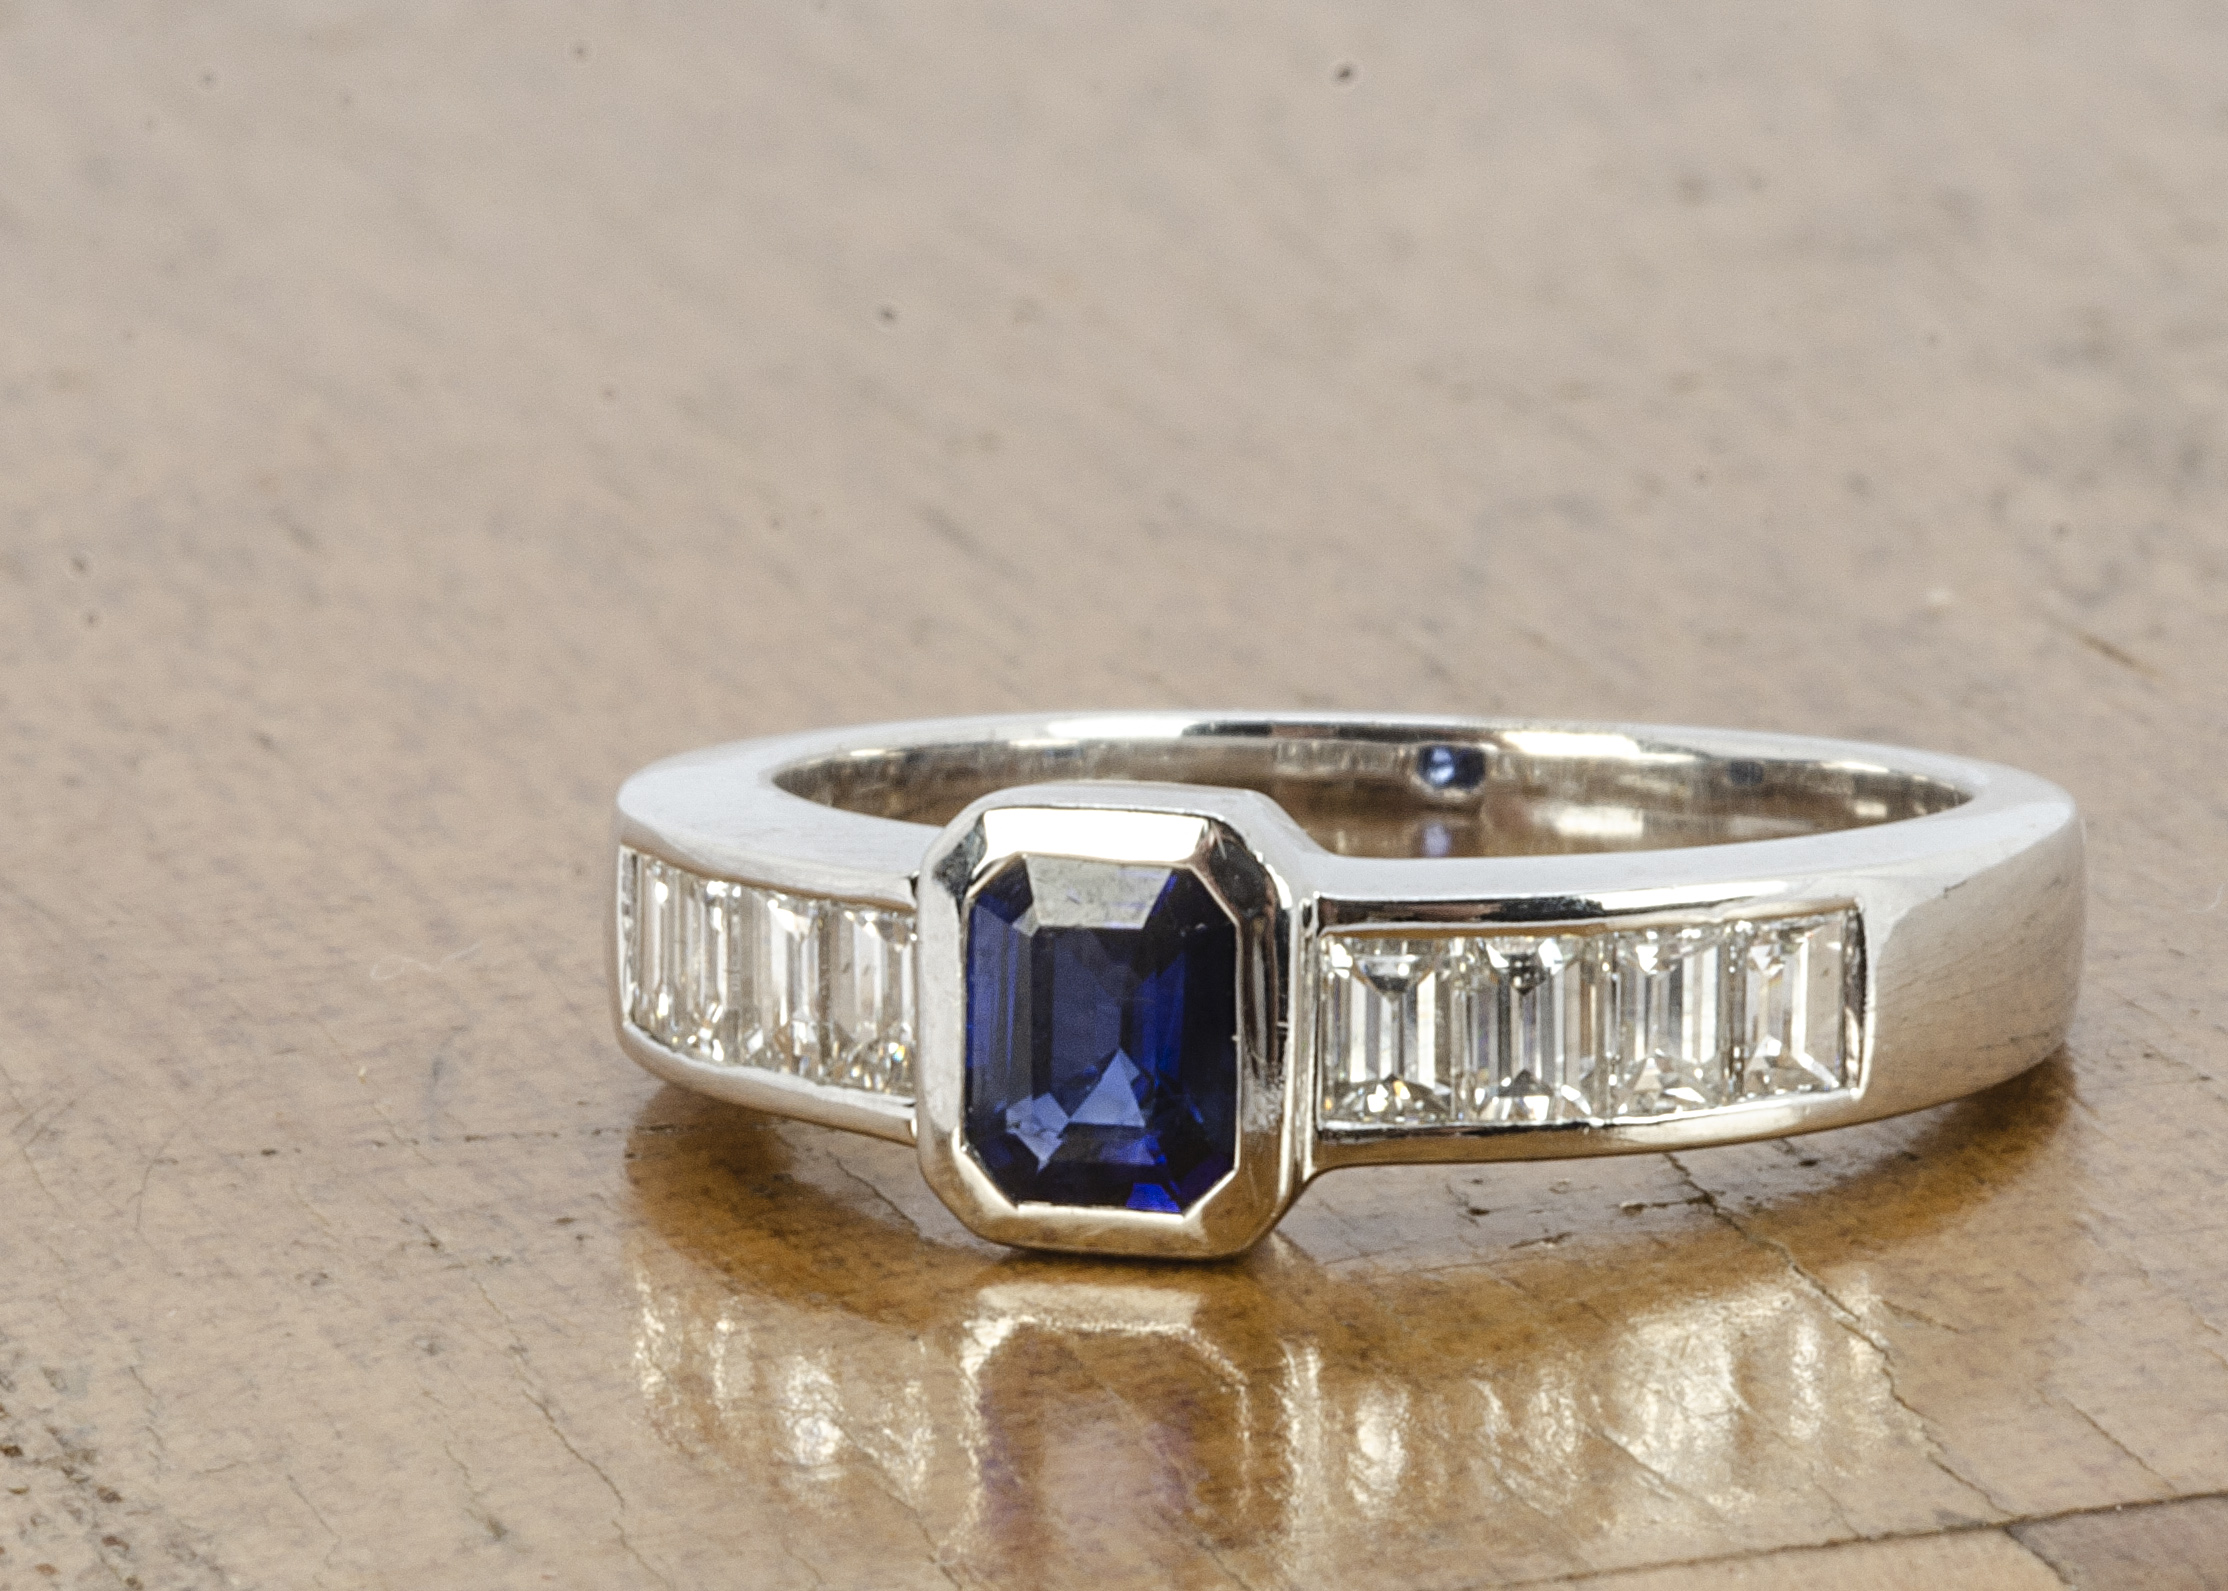 An 18ct white gold Art Deco style sapphire and diamond dress ring, the rectangular cut sapphire